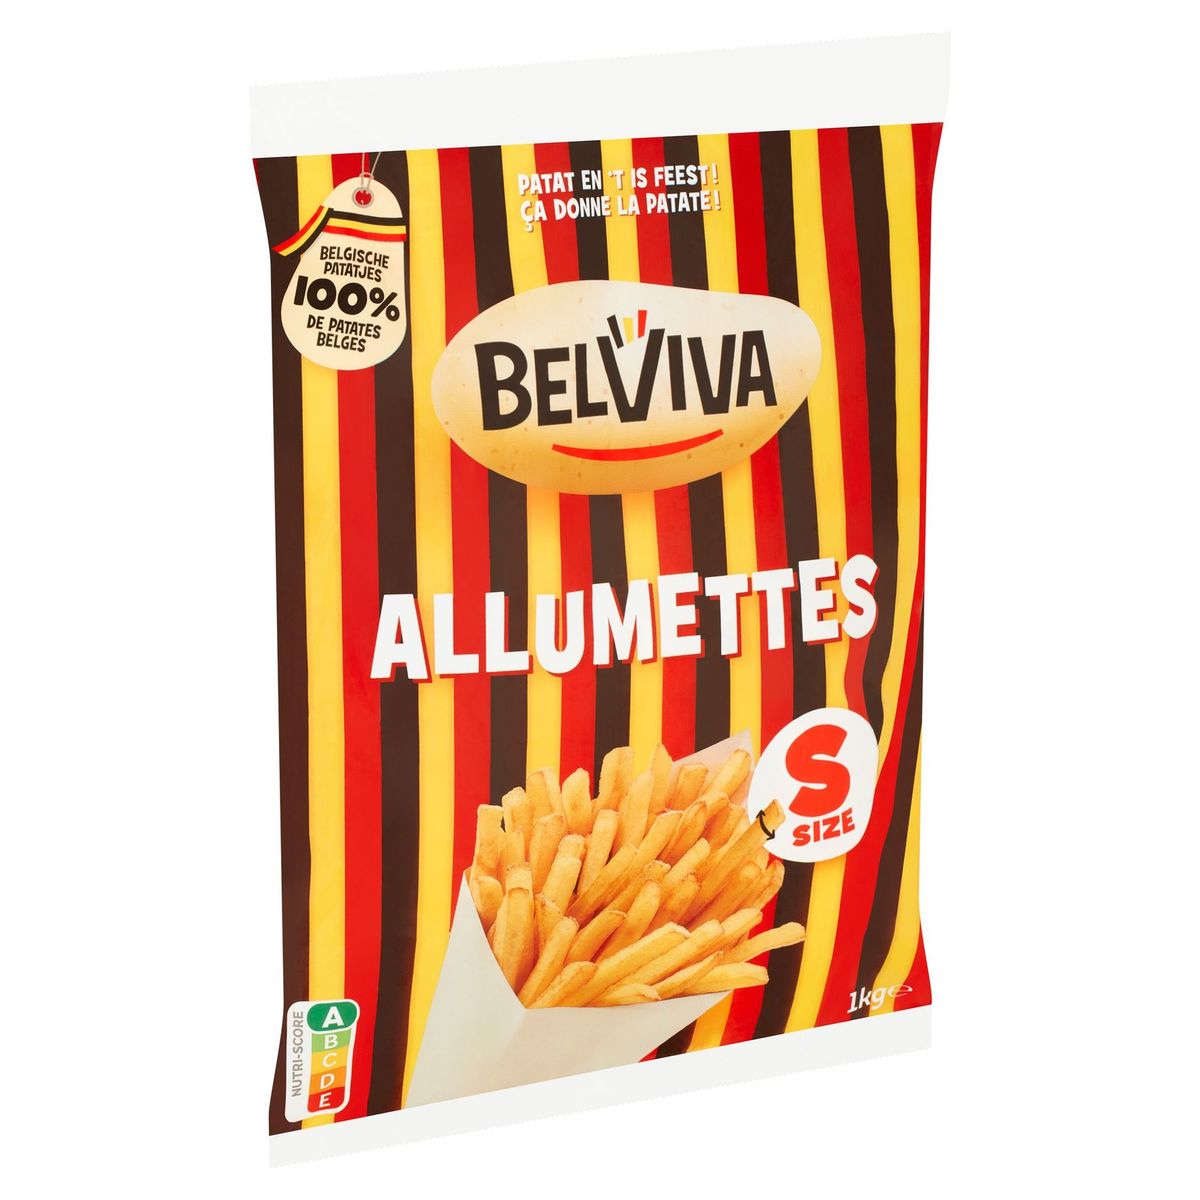 BELVIVA Allumettes S Size 1 kg